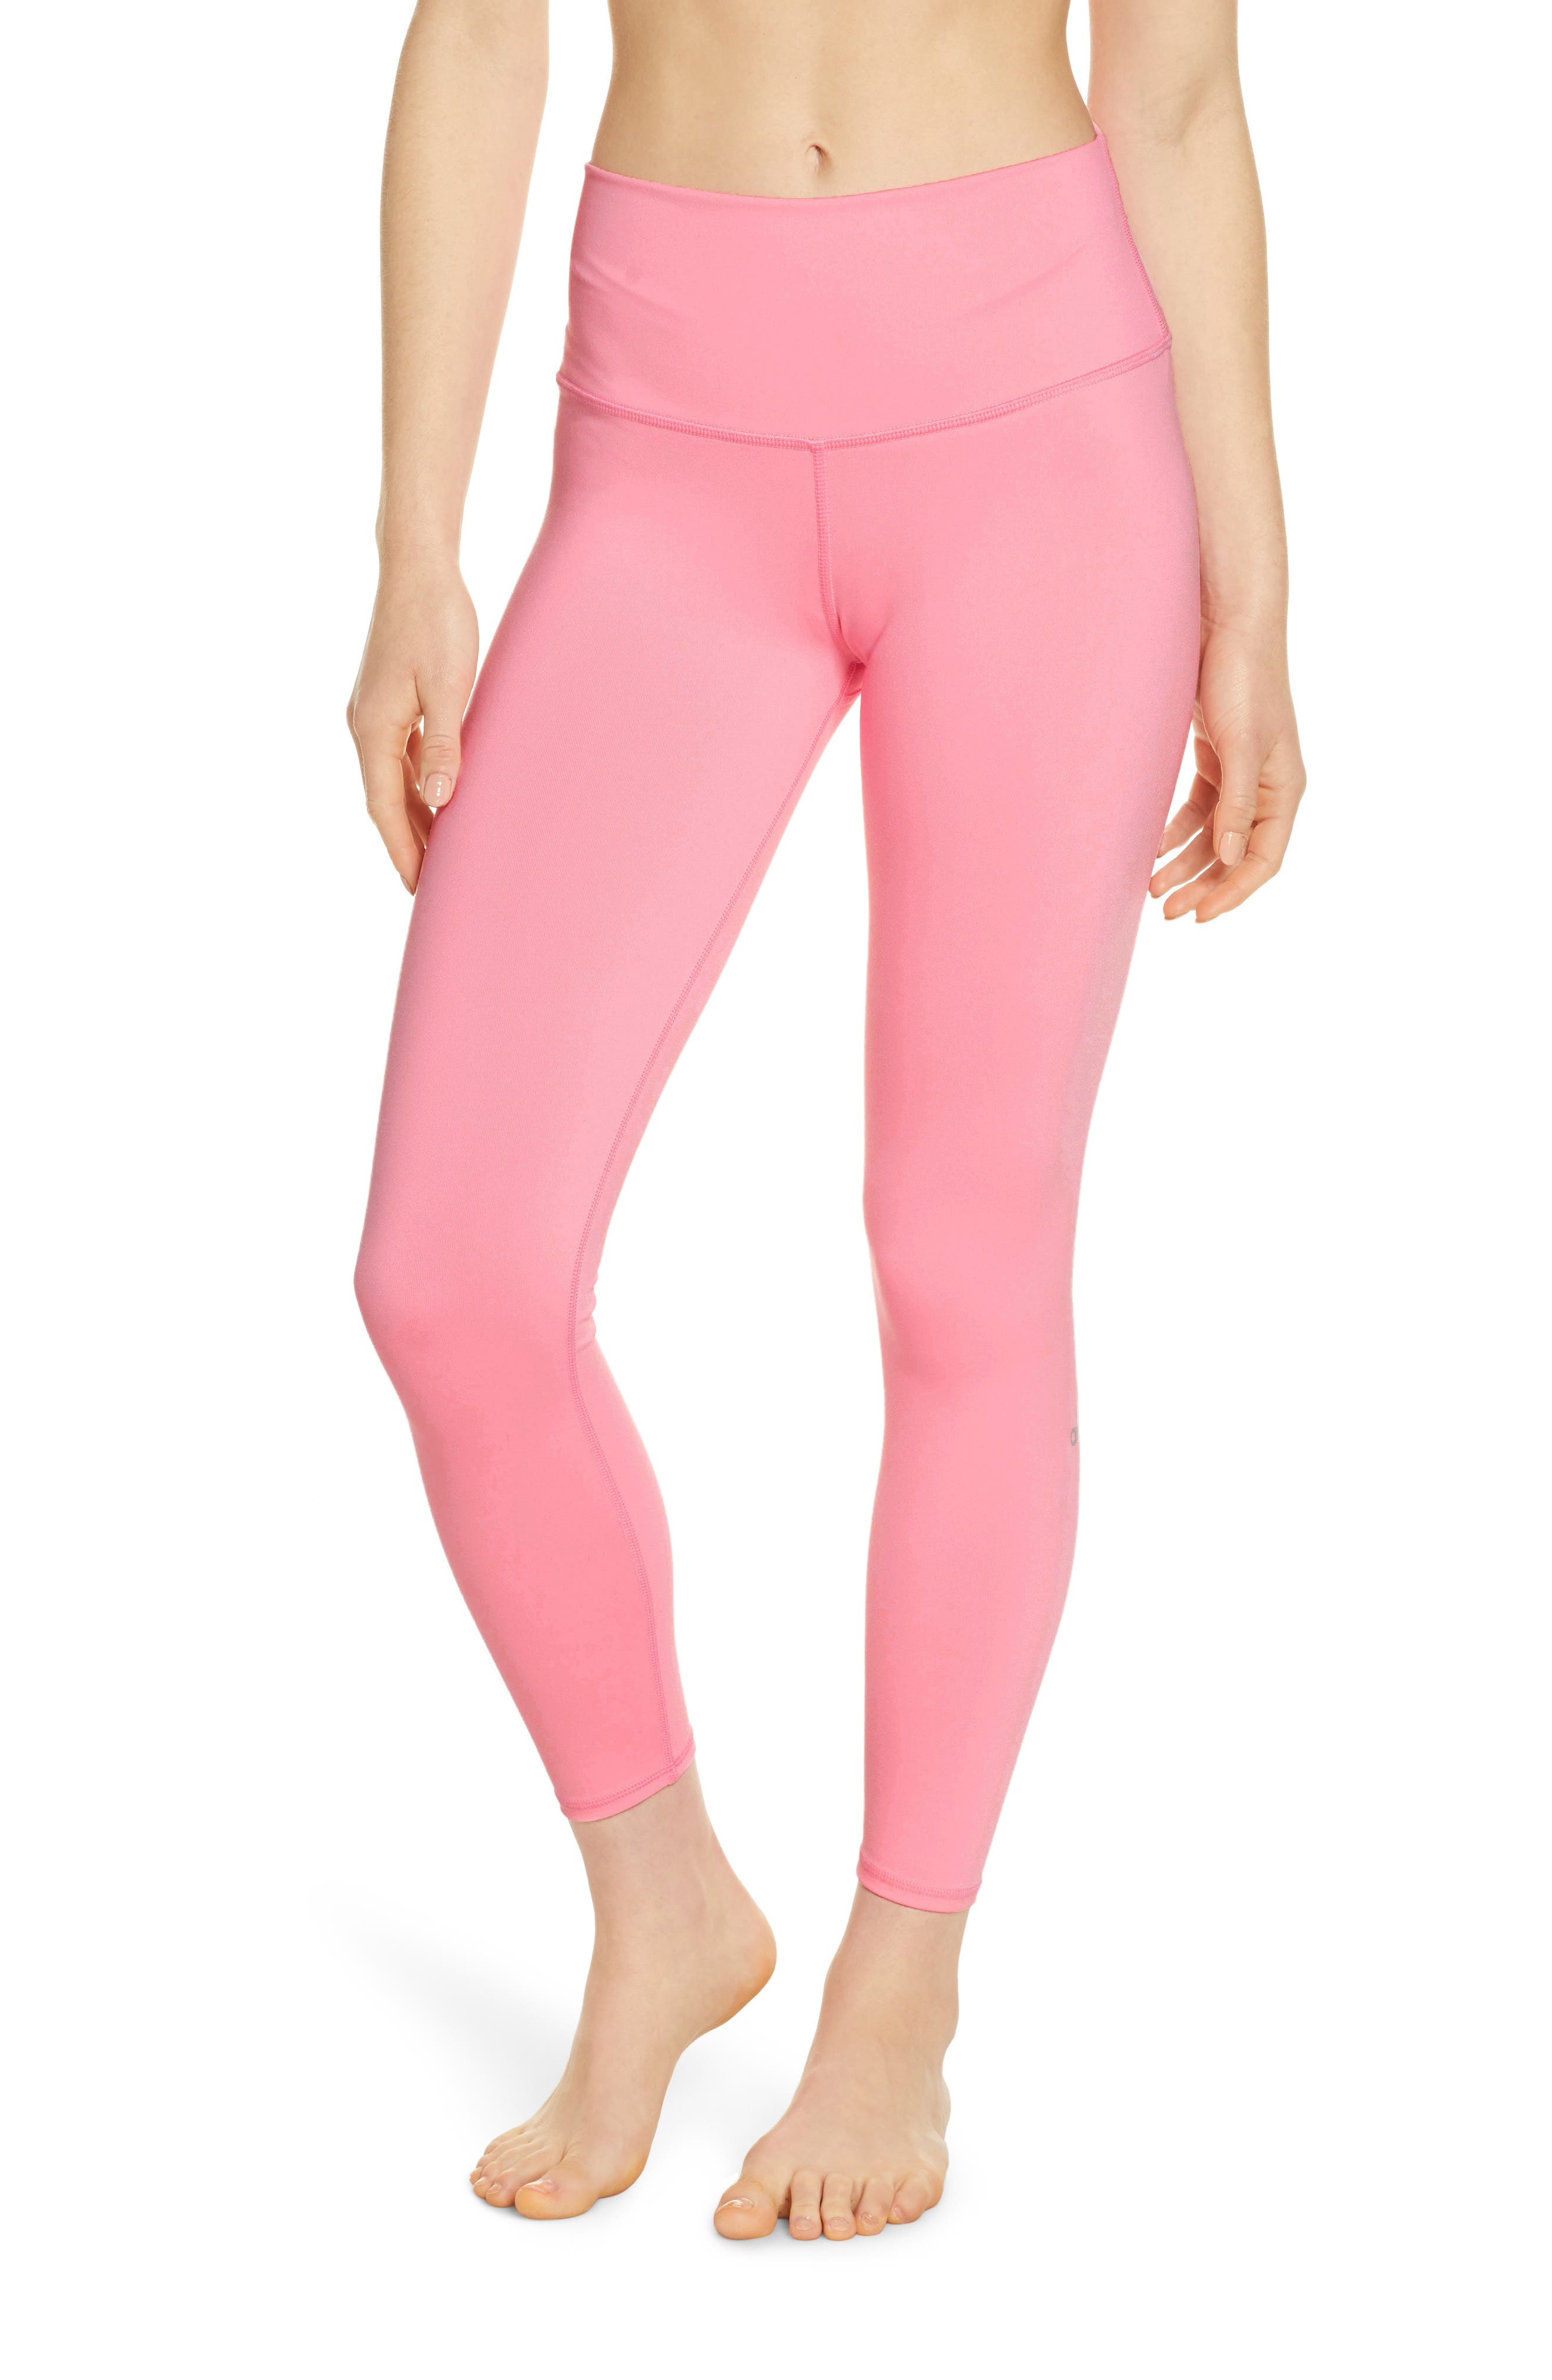 alo pink leggings